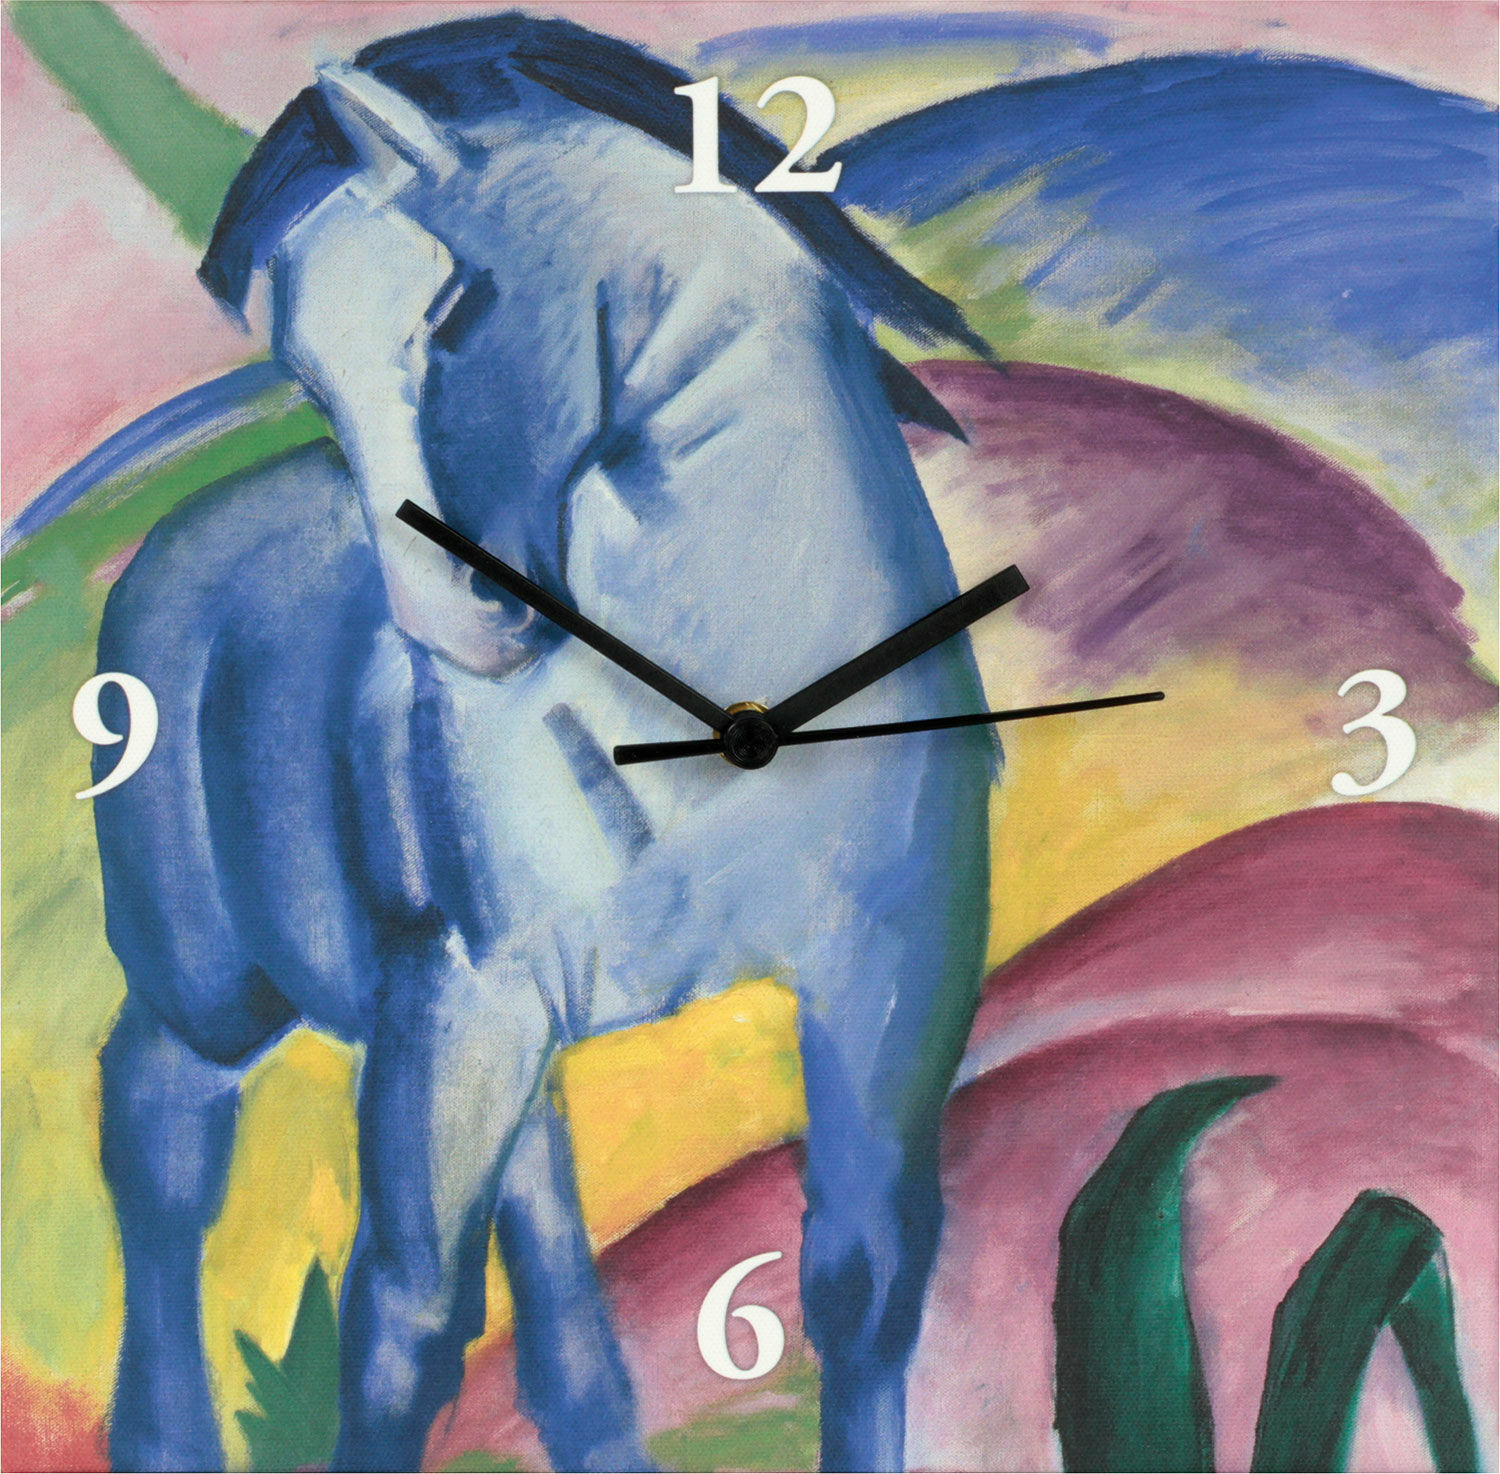 Wall clock "Blue Horse I" by Franz Marc